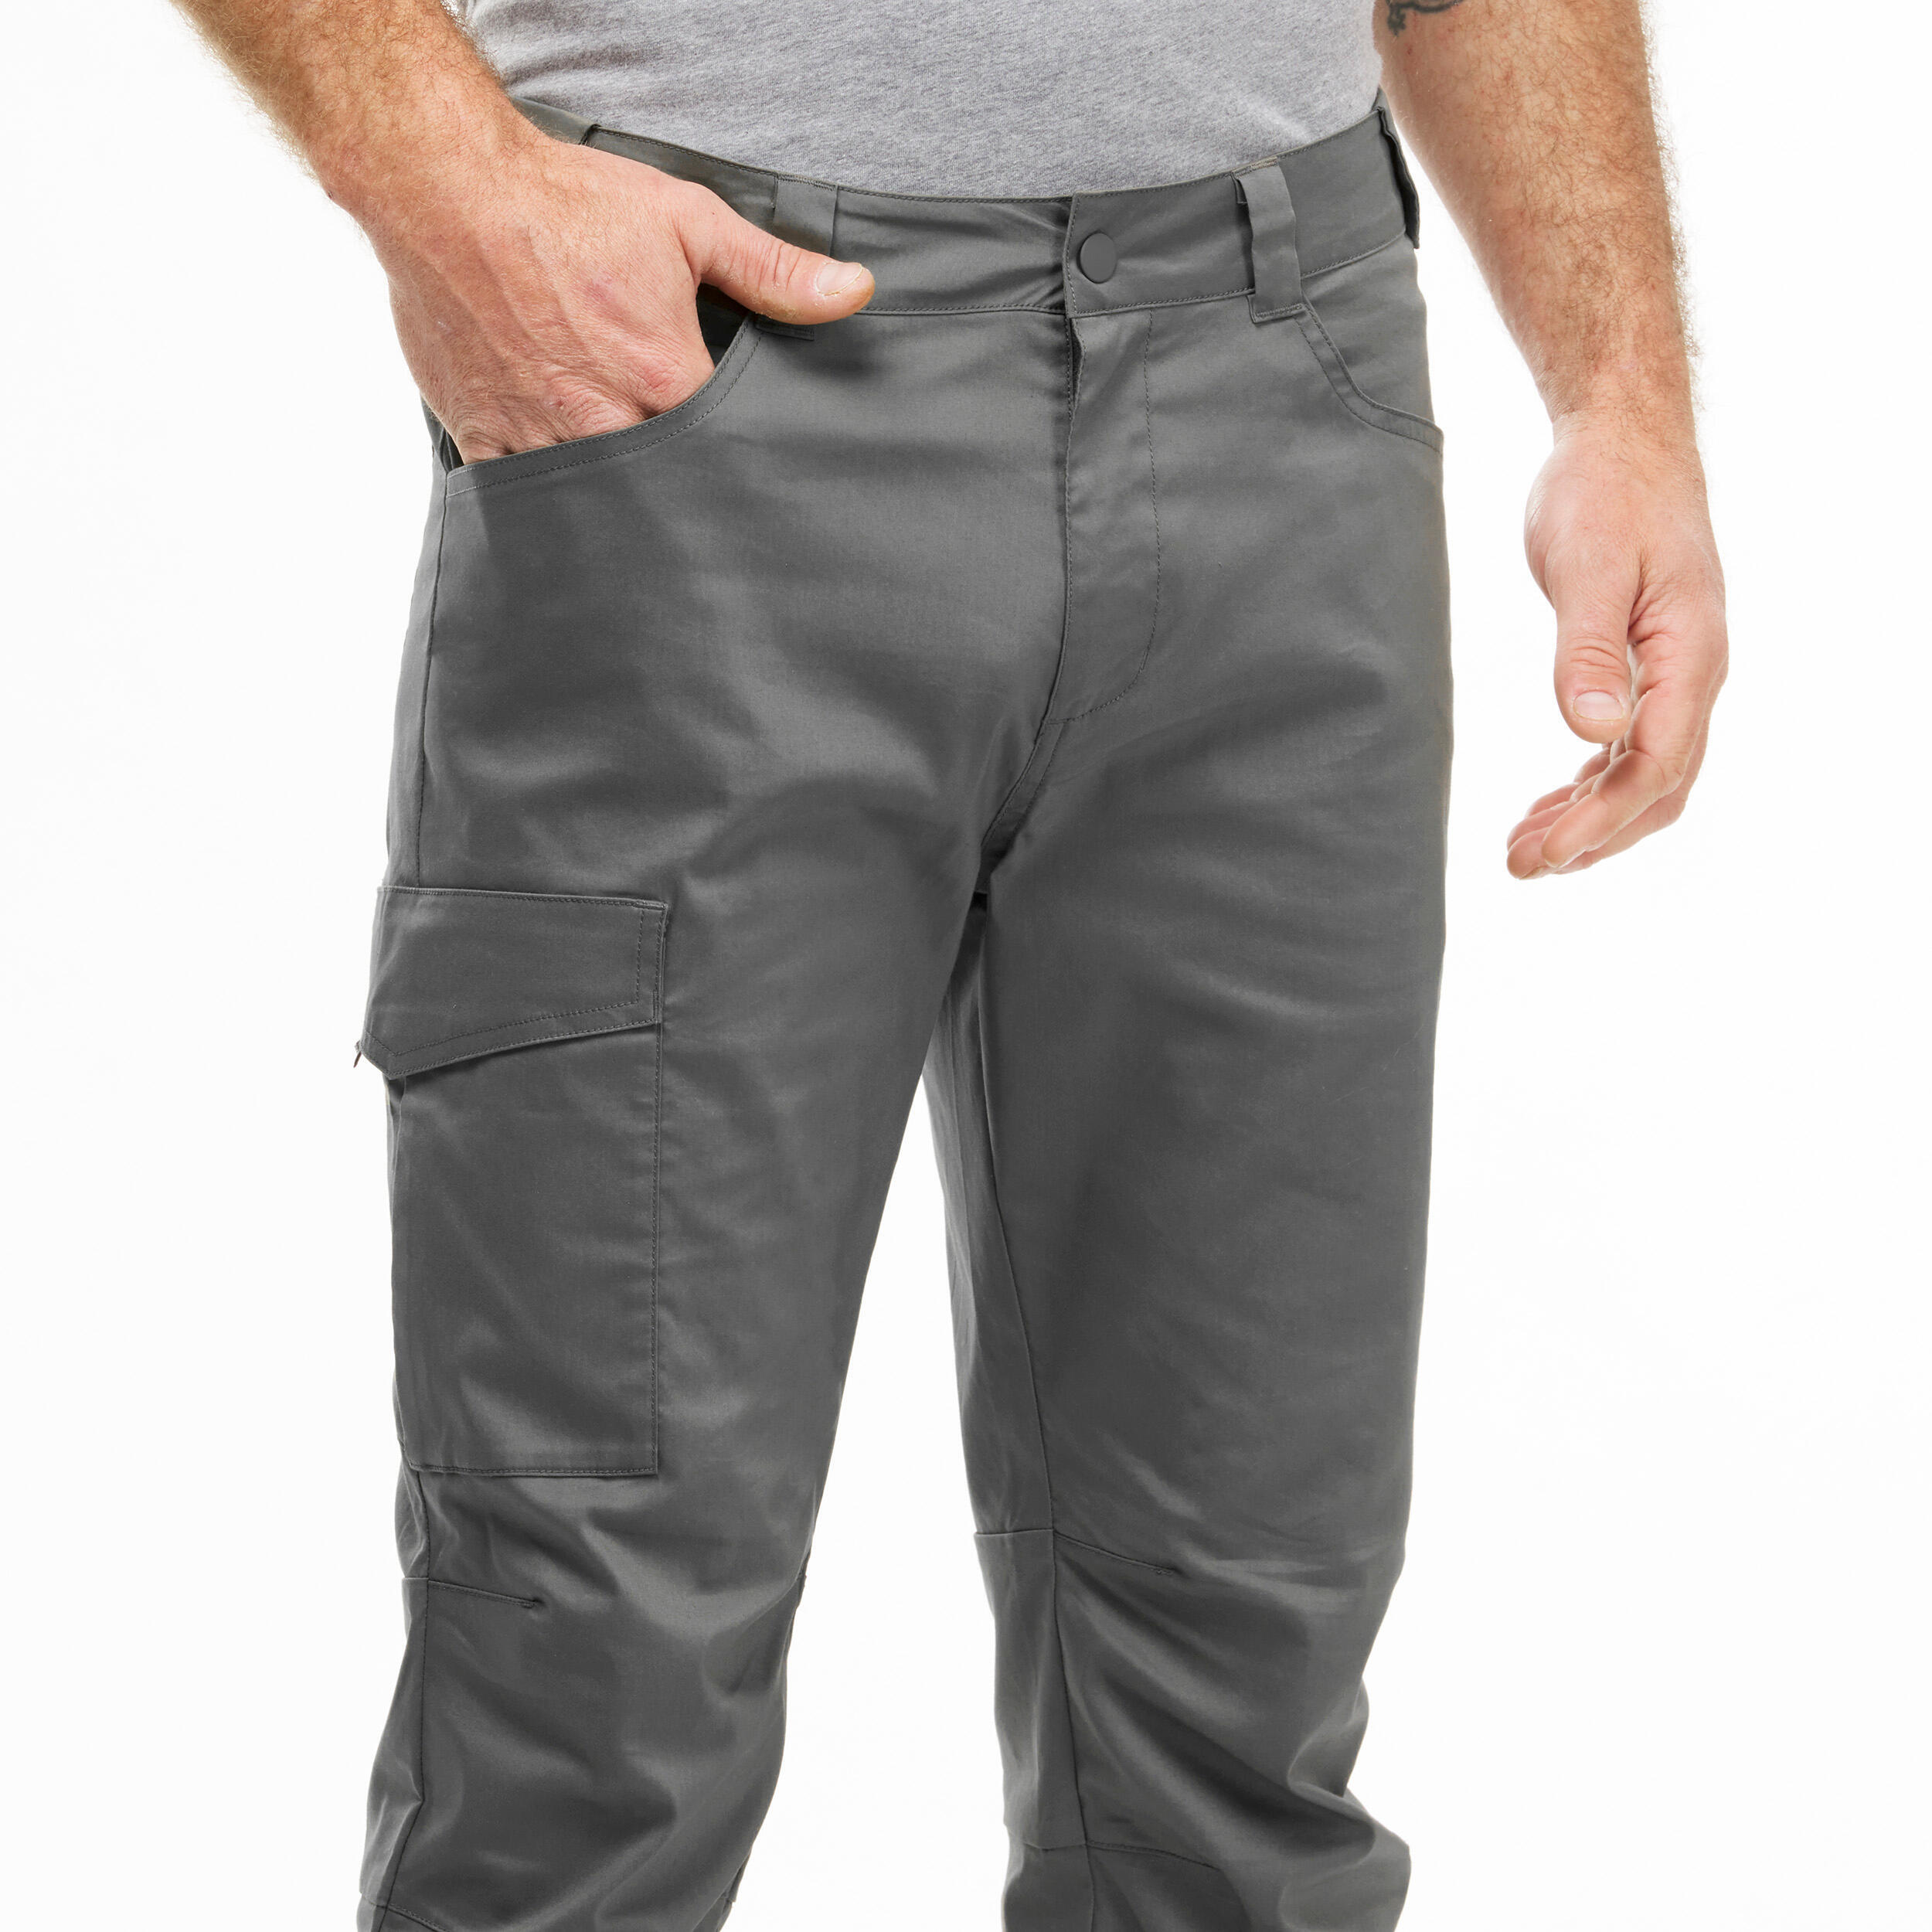 Men’s Hiking Trousers NH100 5/8